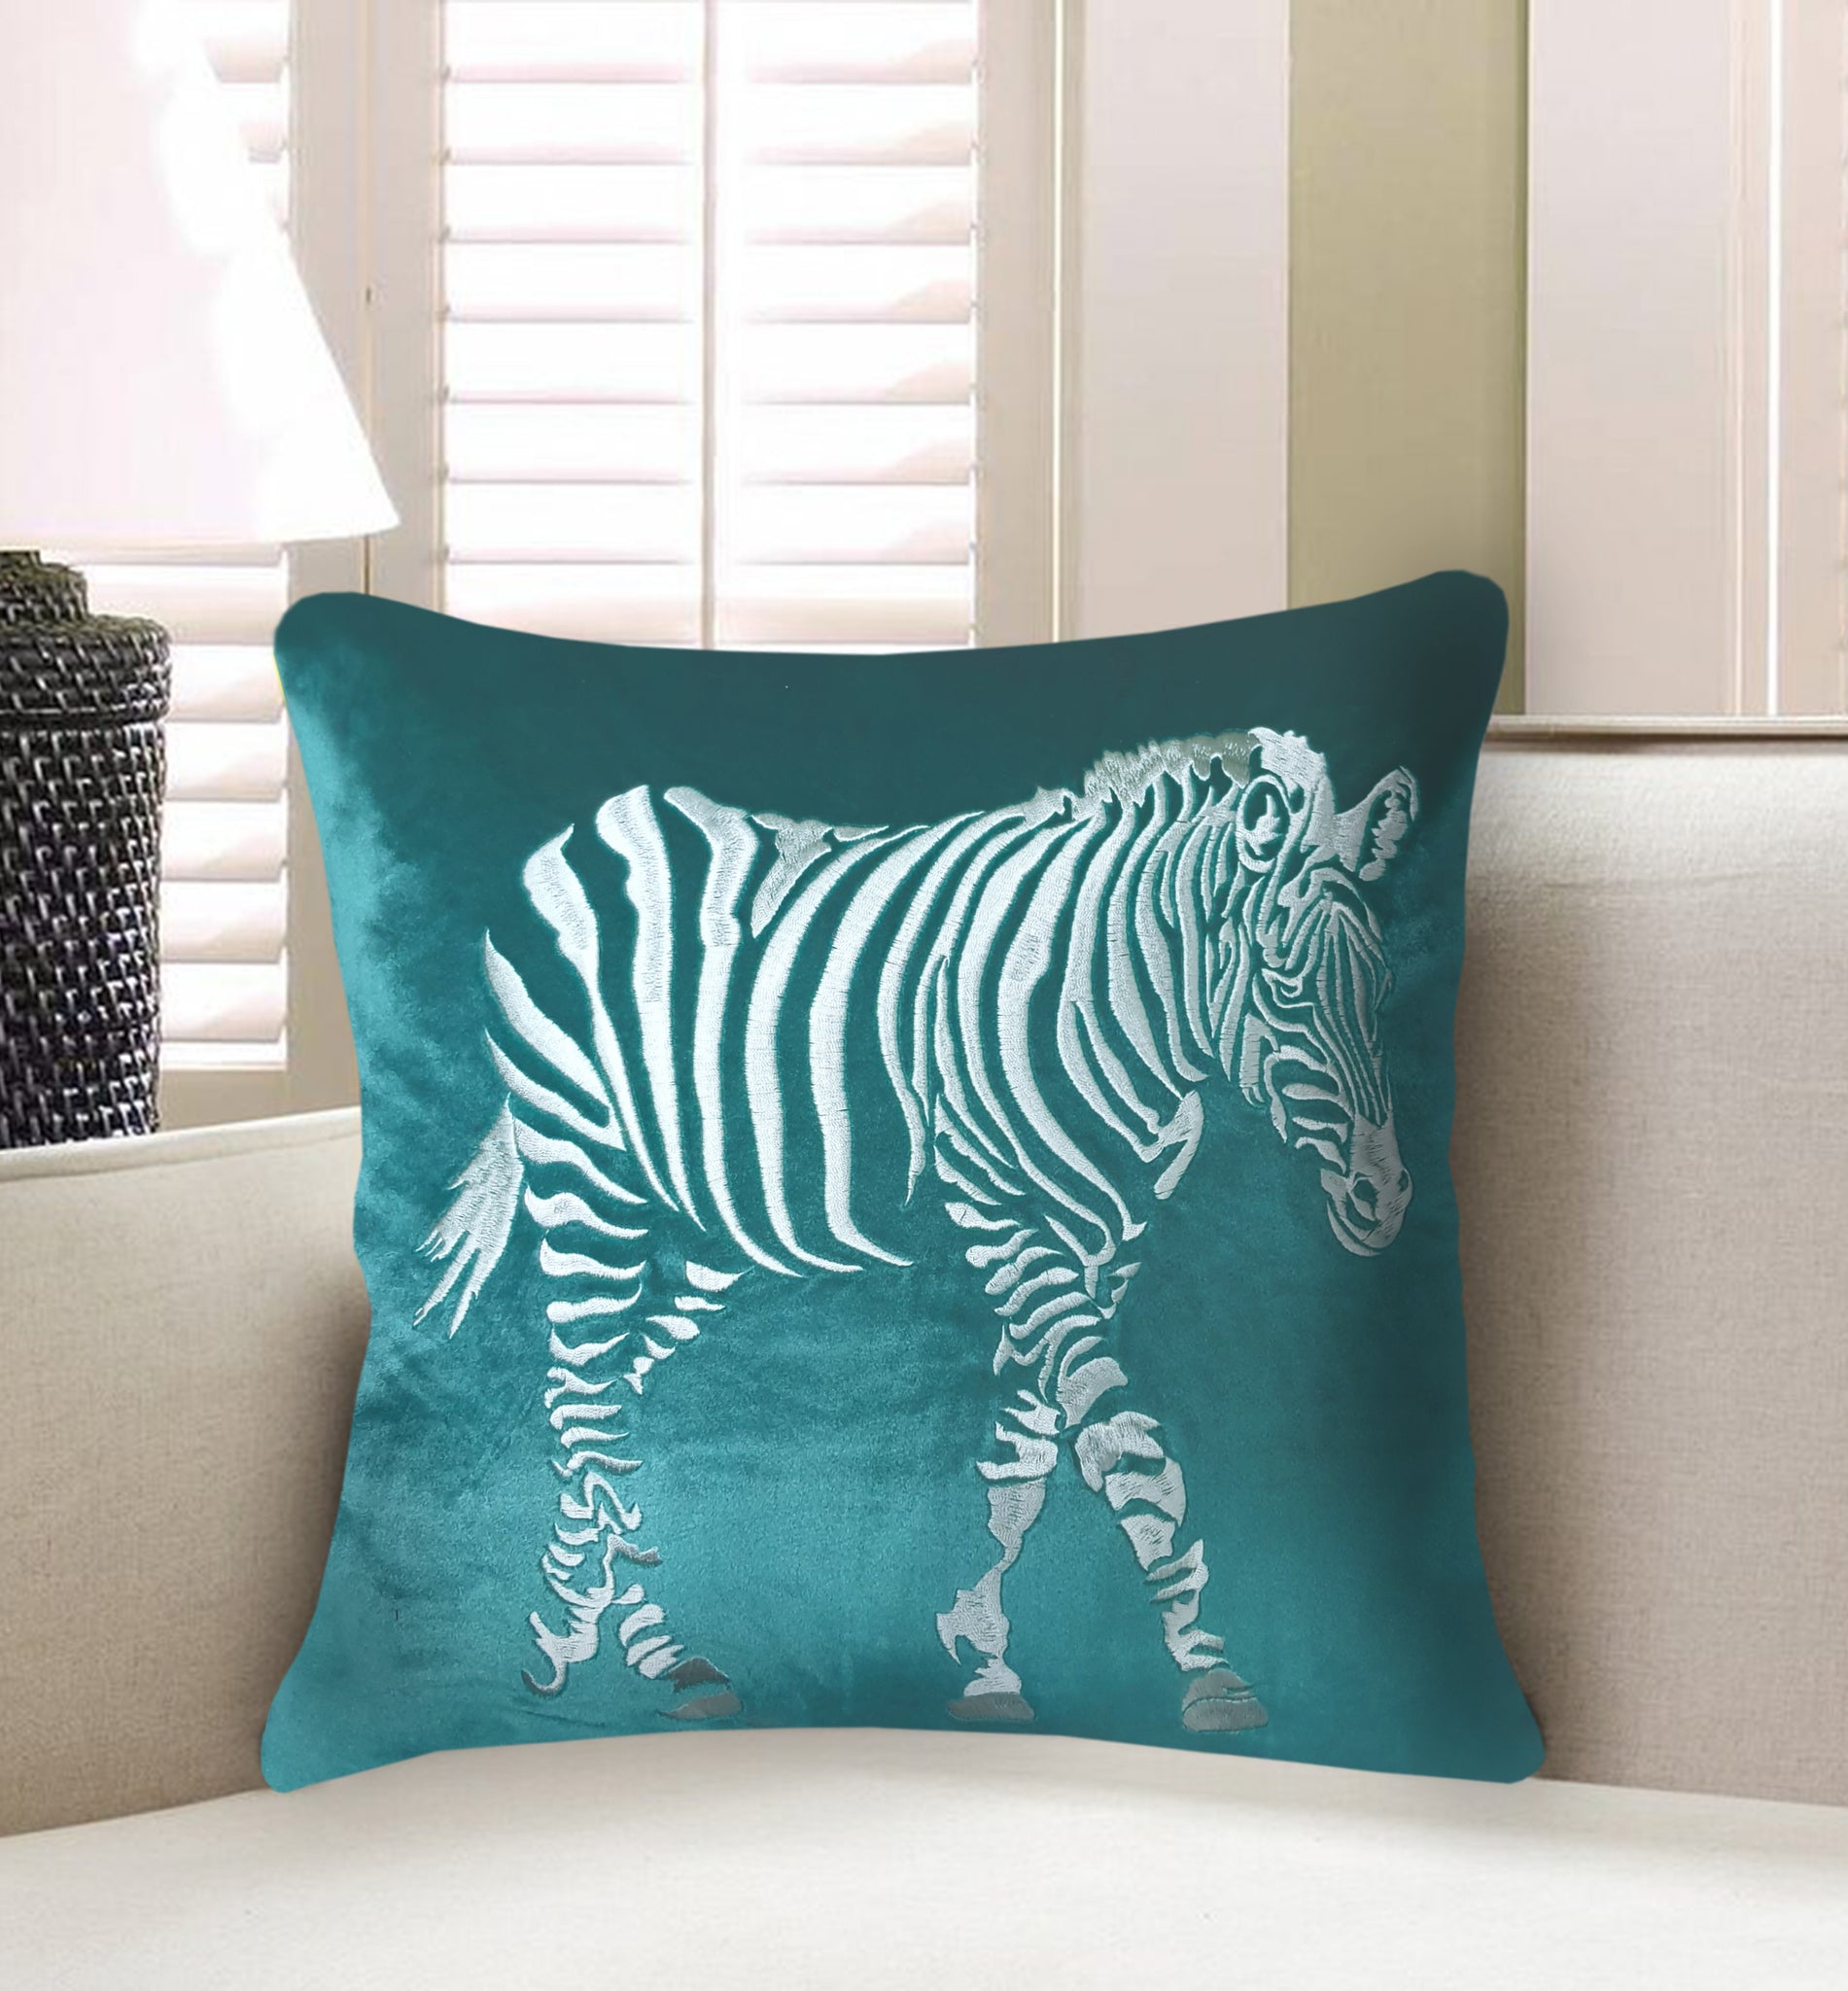  Velvet Cushion Cover Zebra Embroidery Decorative Pillowcase Modern Home Decor Throw Pillow for Sofa Chair Living Room 45x45 cm 